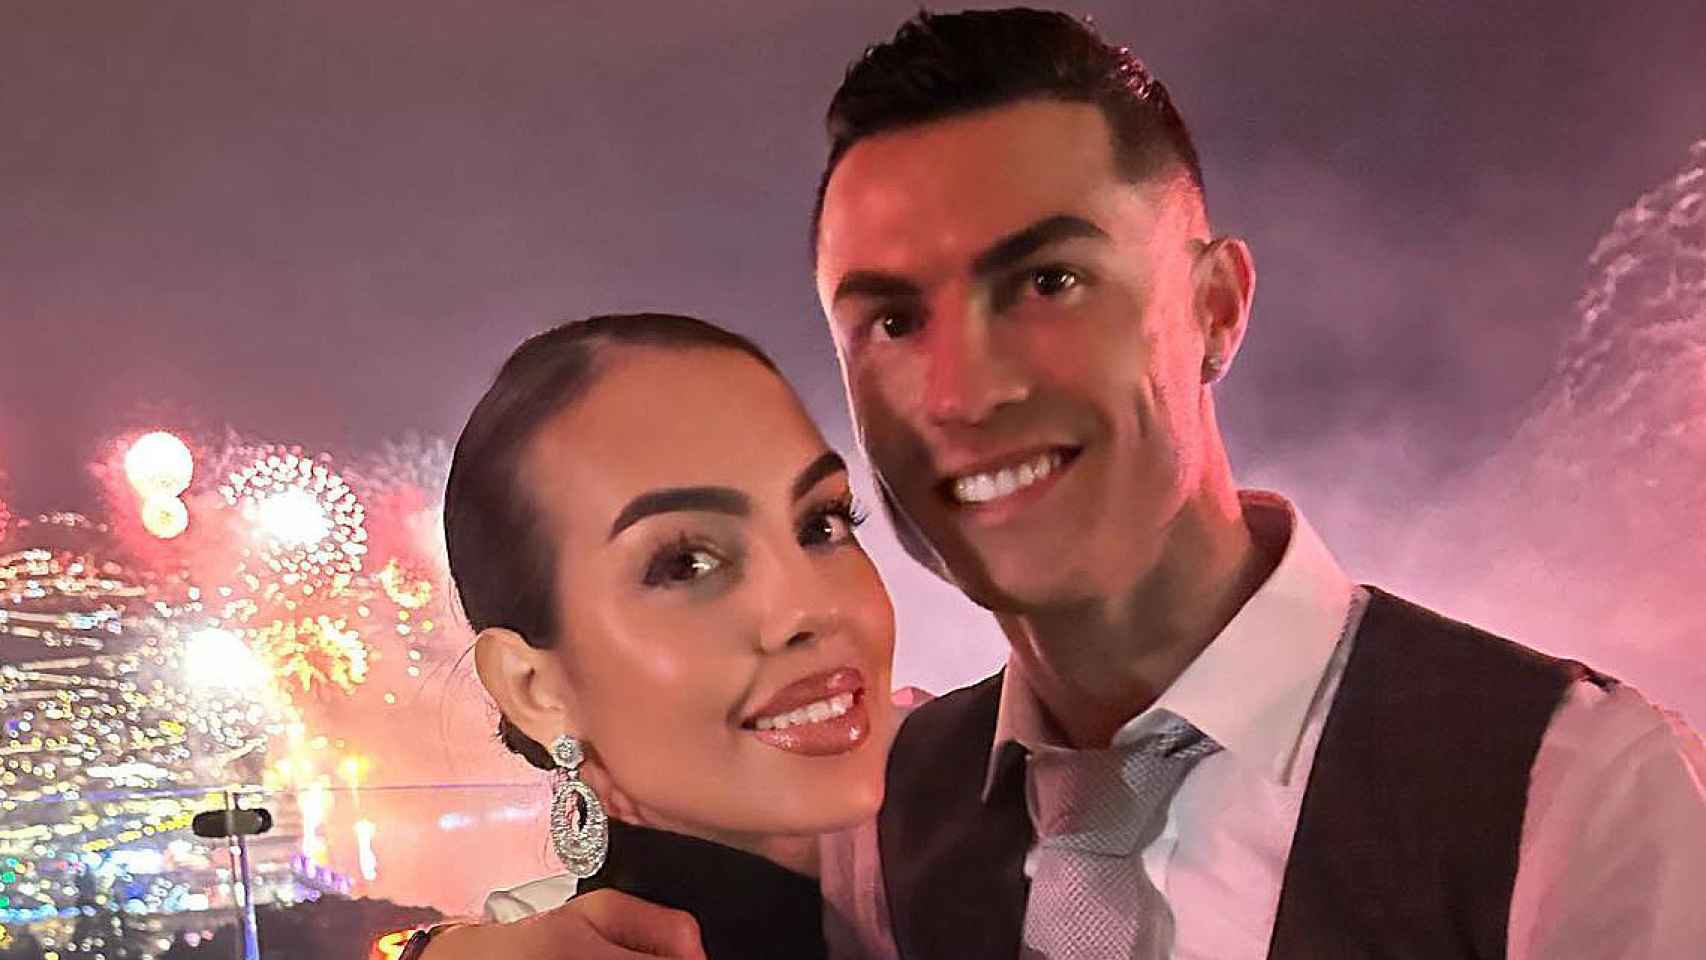 Georgina Rodríguez y Cristiano Ronaldo.